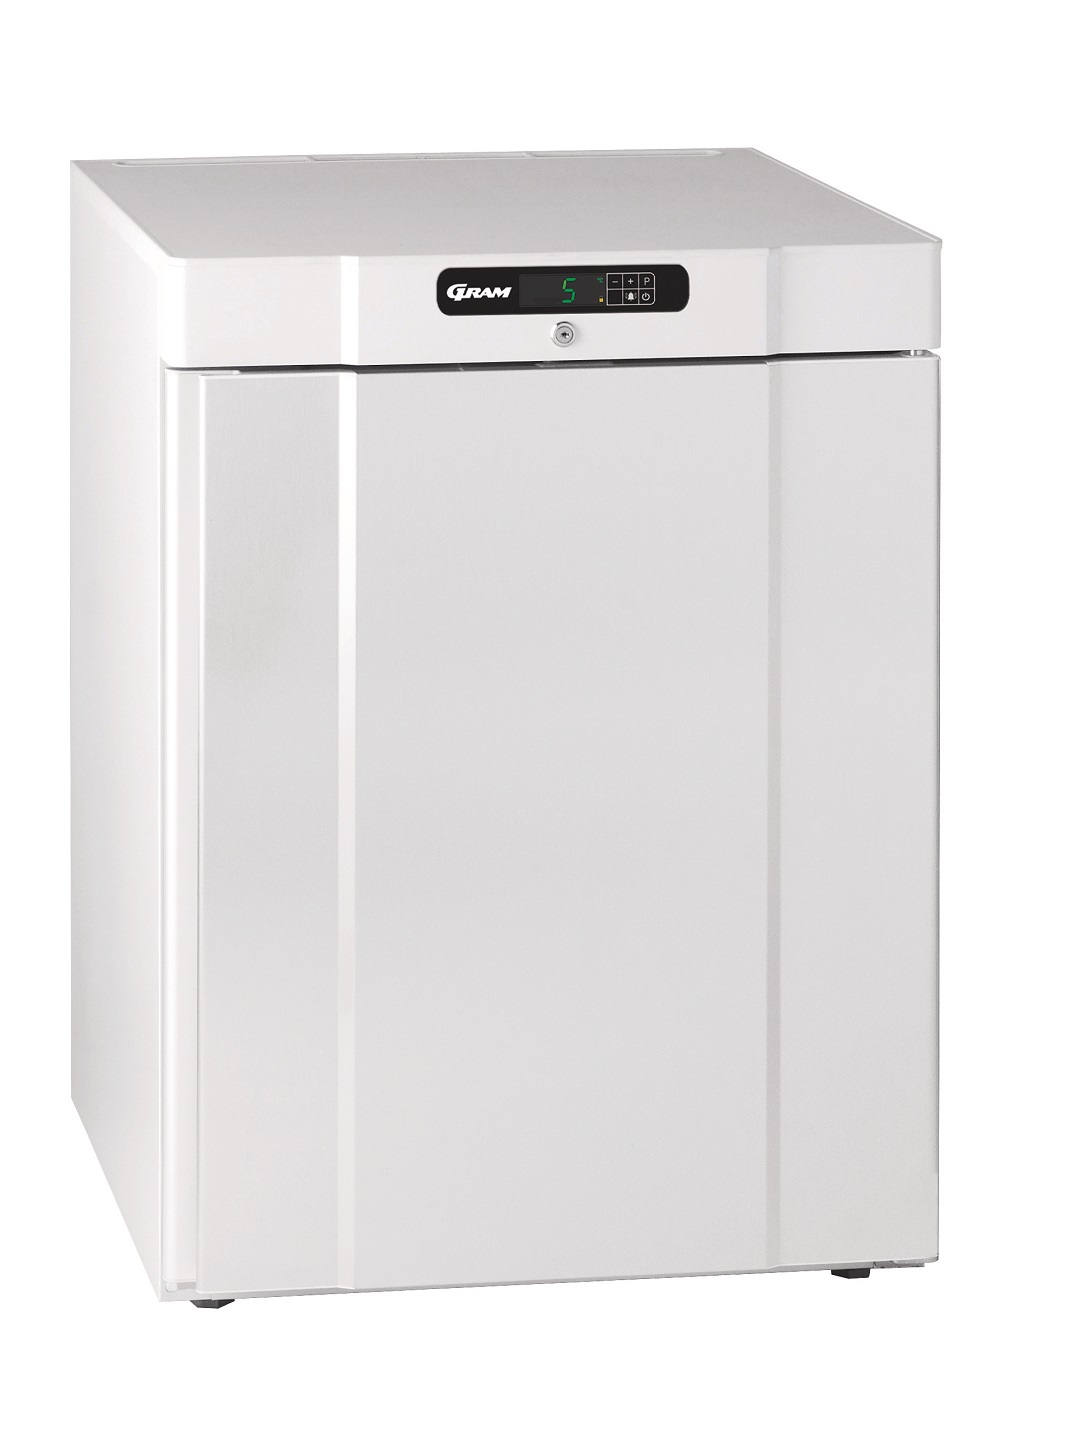 Gram Compact K 220 LG Undercounter Refrigerator (962200461)